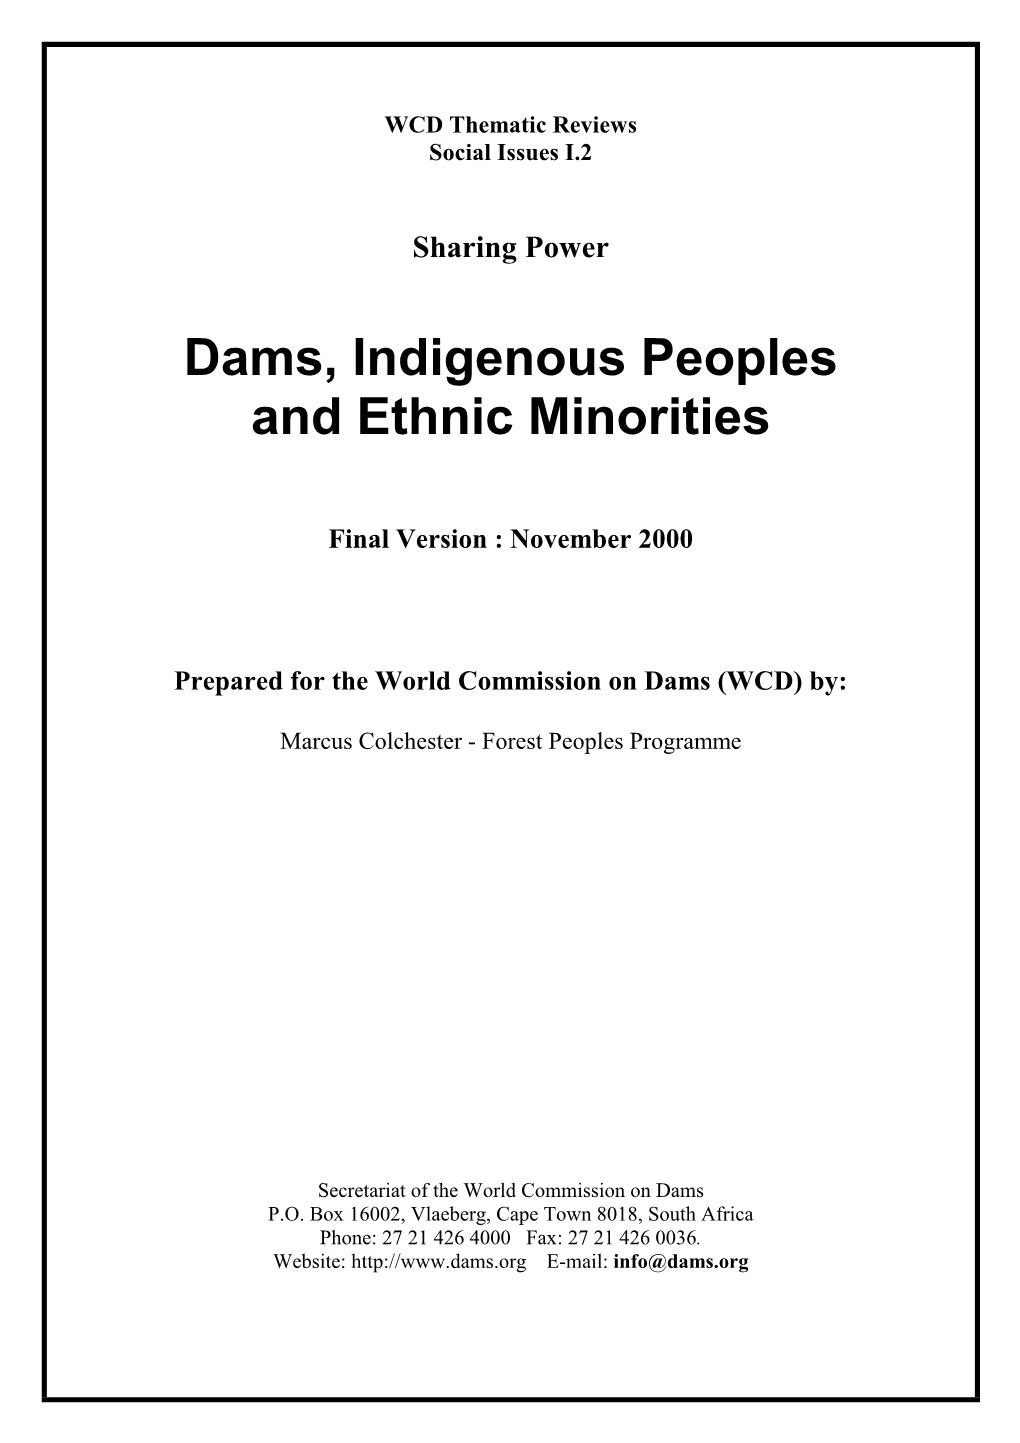 Dams, Indigenous Peoples and Ethnic Minorities